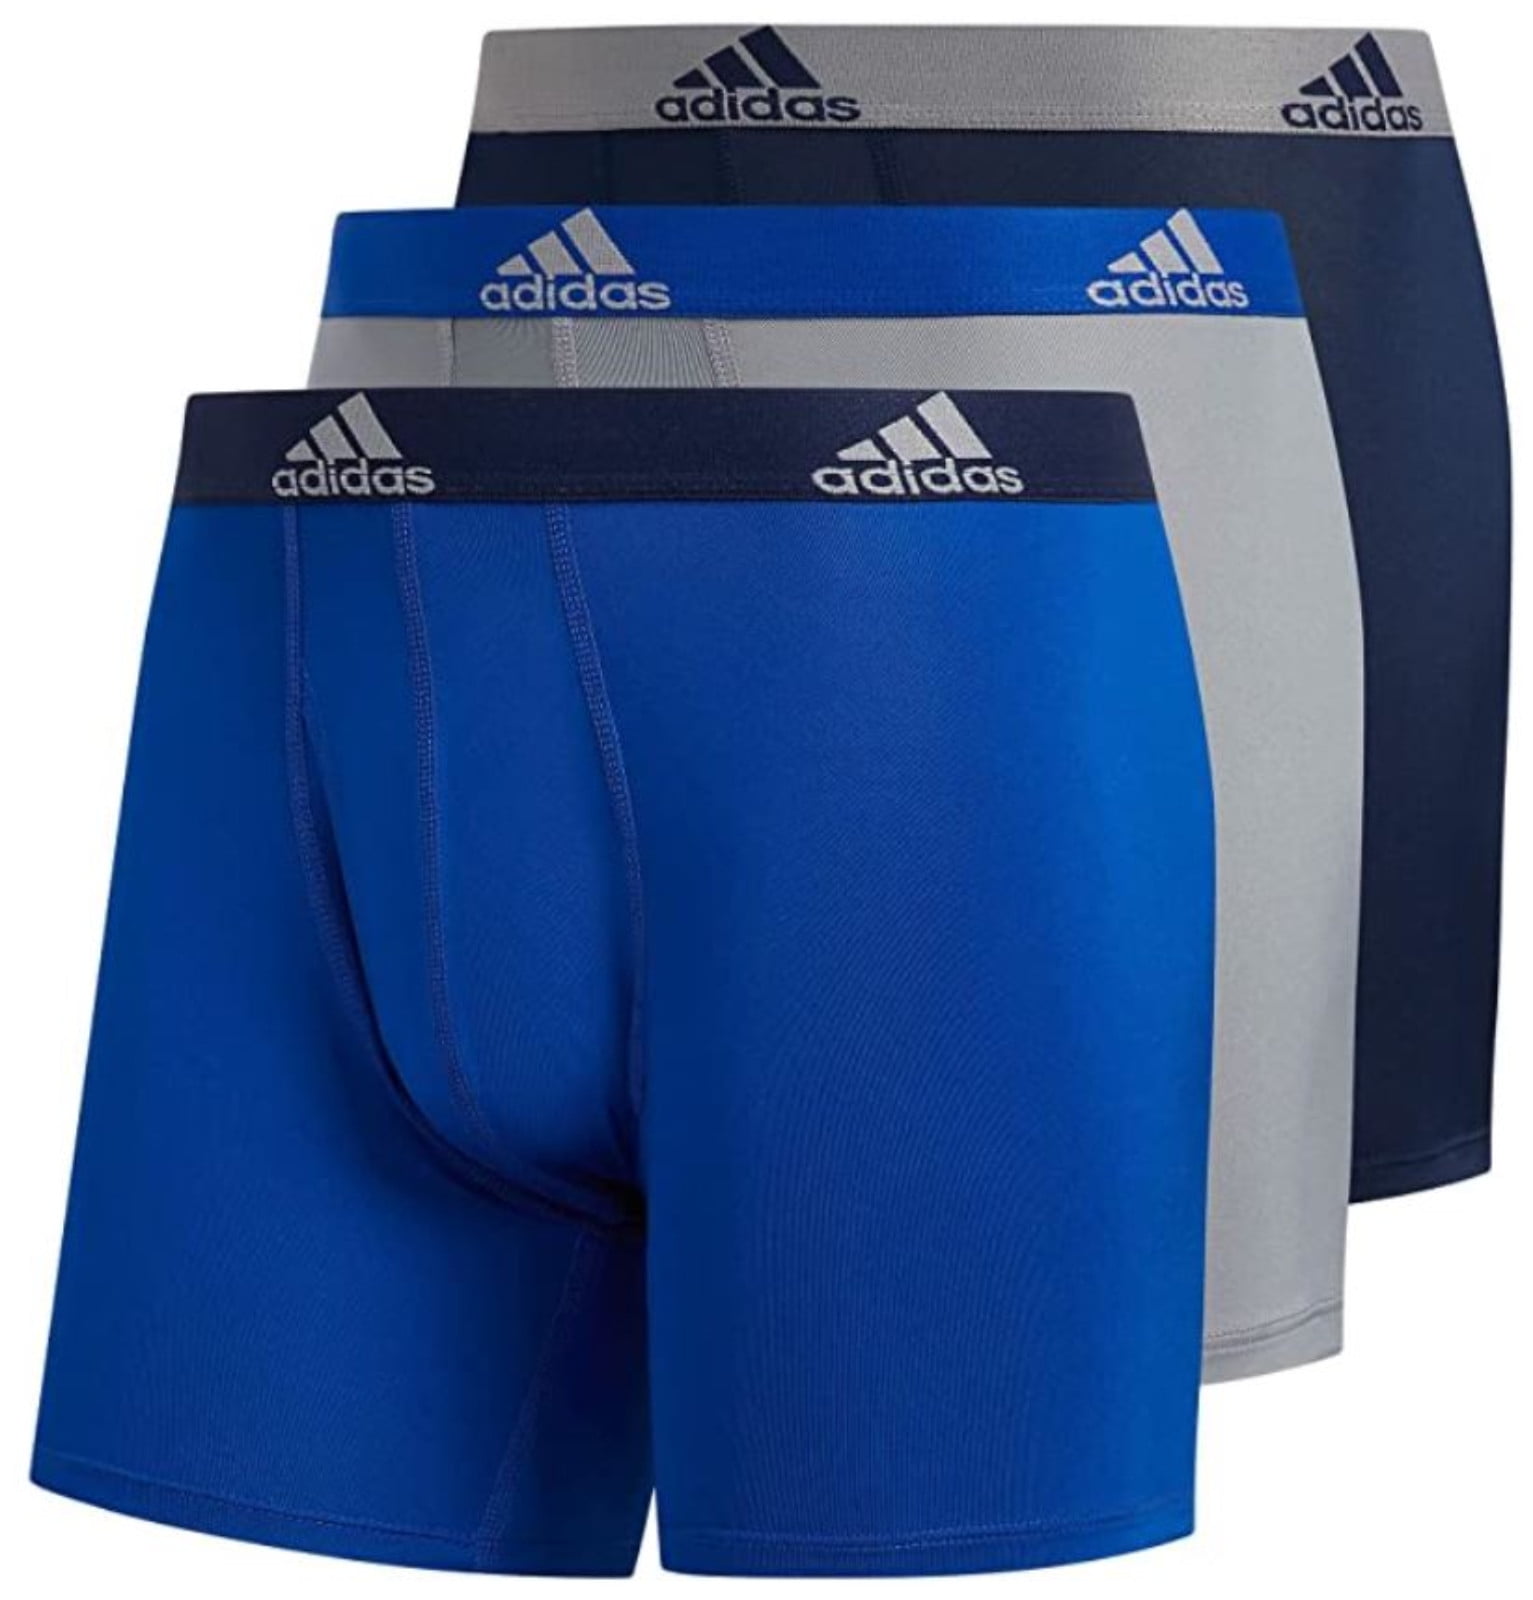 Adidas Men's Performance Boxer Brief Underwear (3-Pack) - Royal/Grey ...